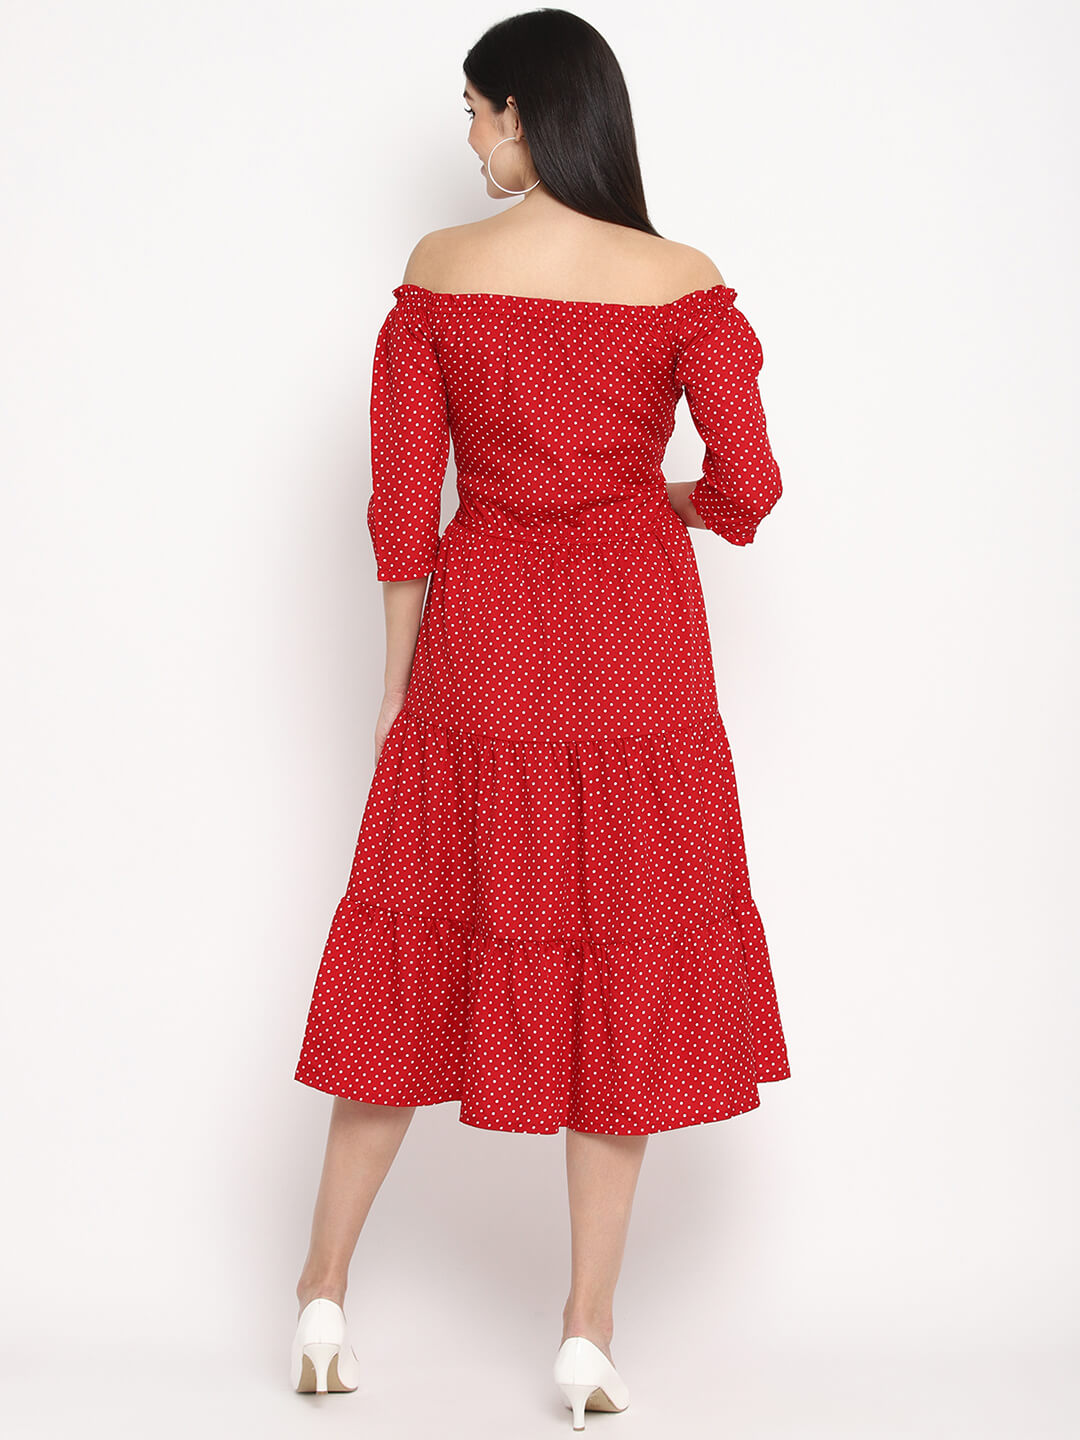 Red And White Polka Dot Off Shoulder Dress